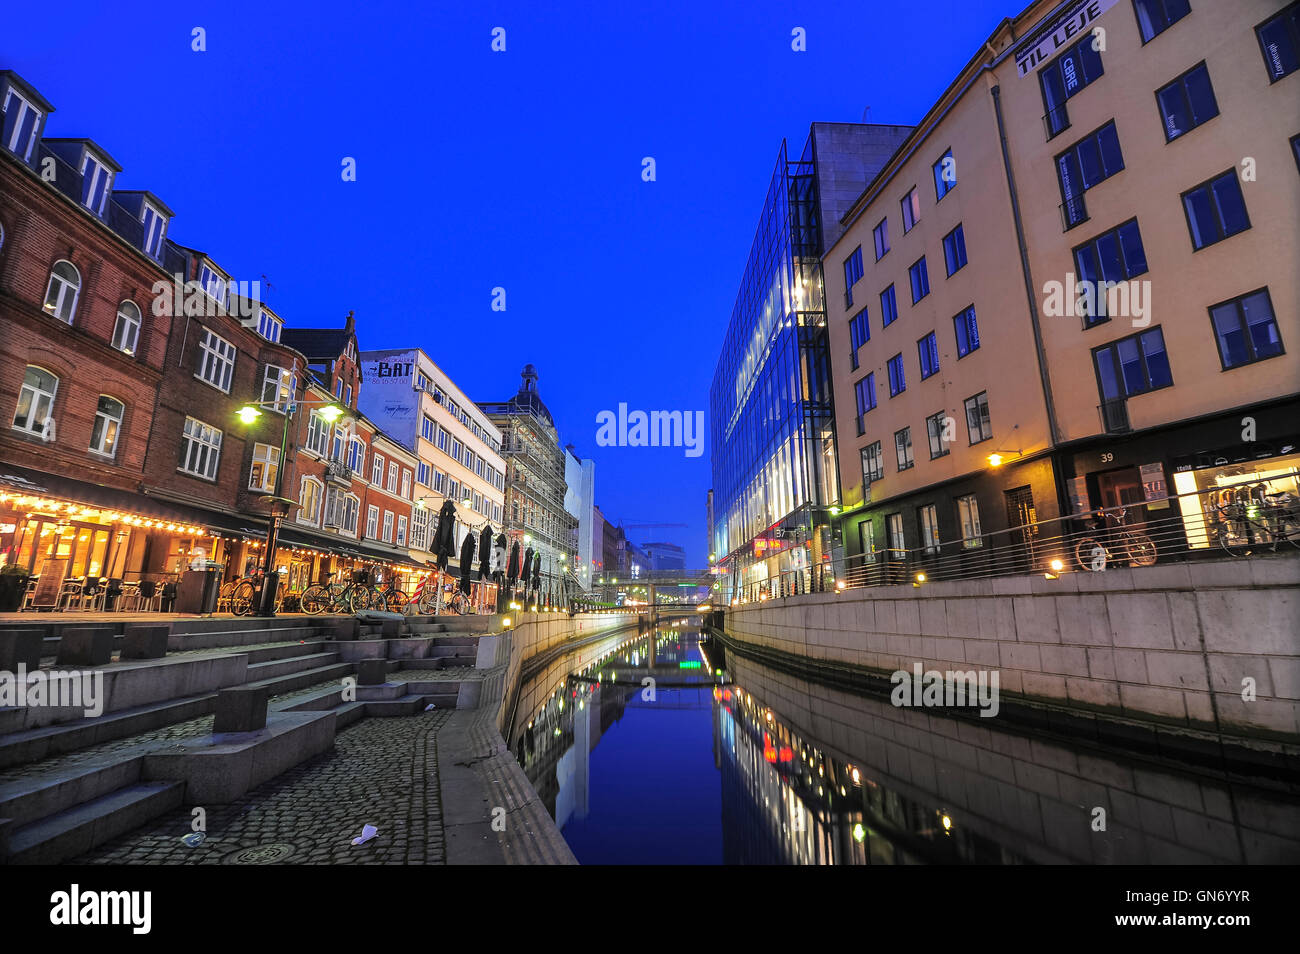 Vista notturna di Aarhus, Danimarca Foto Stock